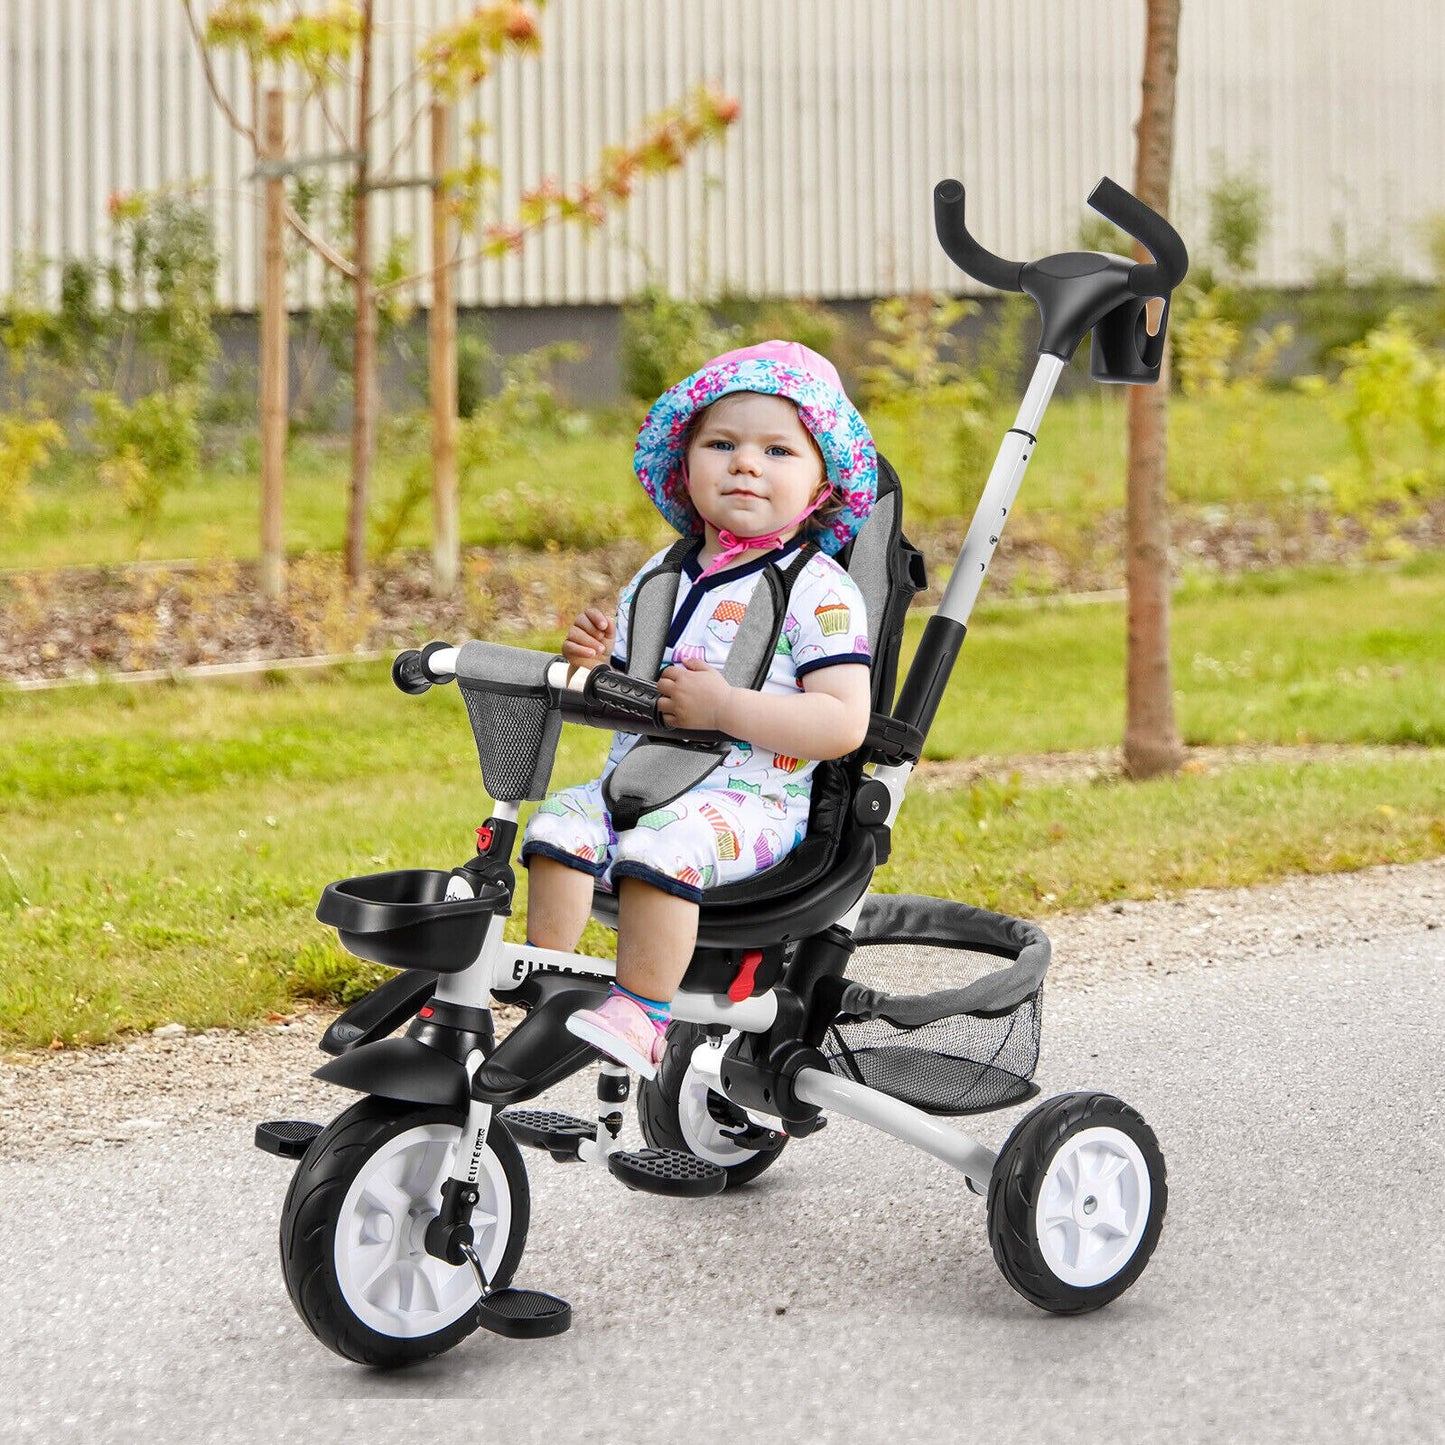 6-In-1 Kids Baby Stroller Tricycle Detachable Learning Toy Bike w/ Canopy - DJVWellnessandPets